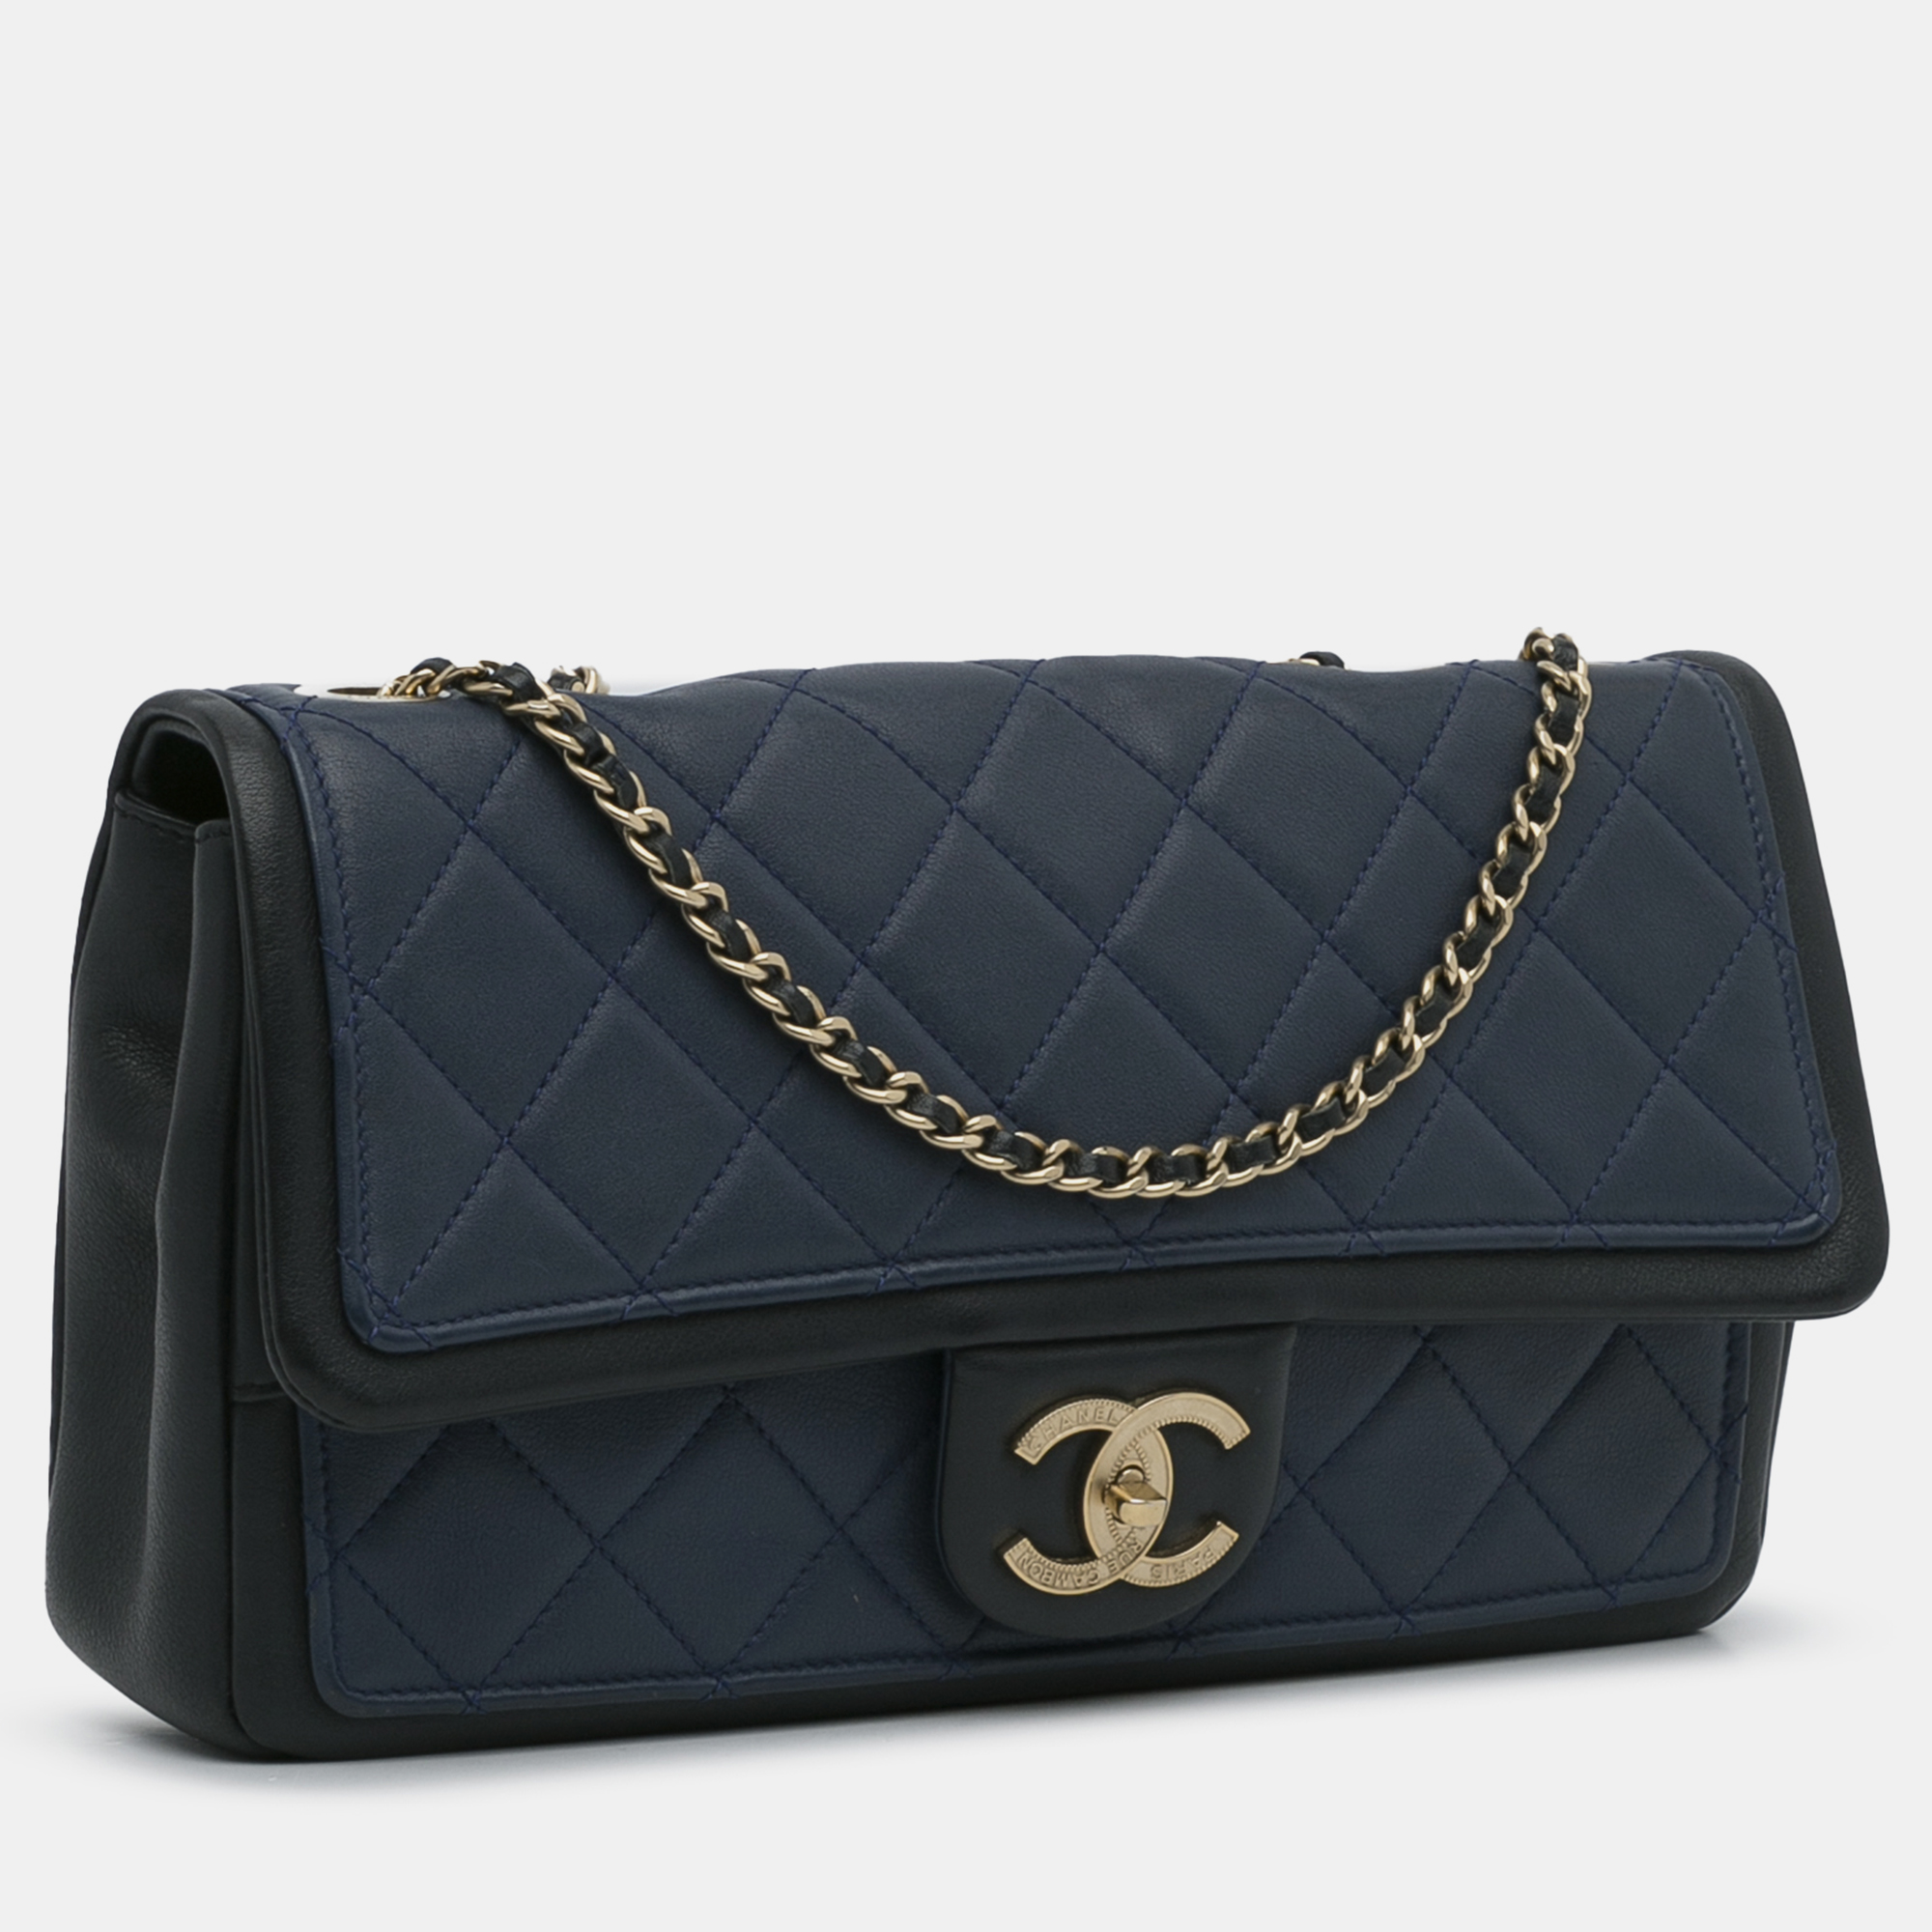 Chanel Blue Leather Medium Bicolor Graphic Flap Bag